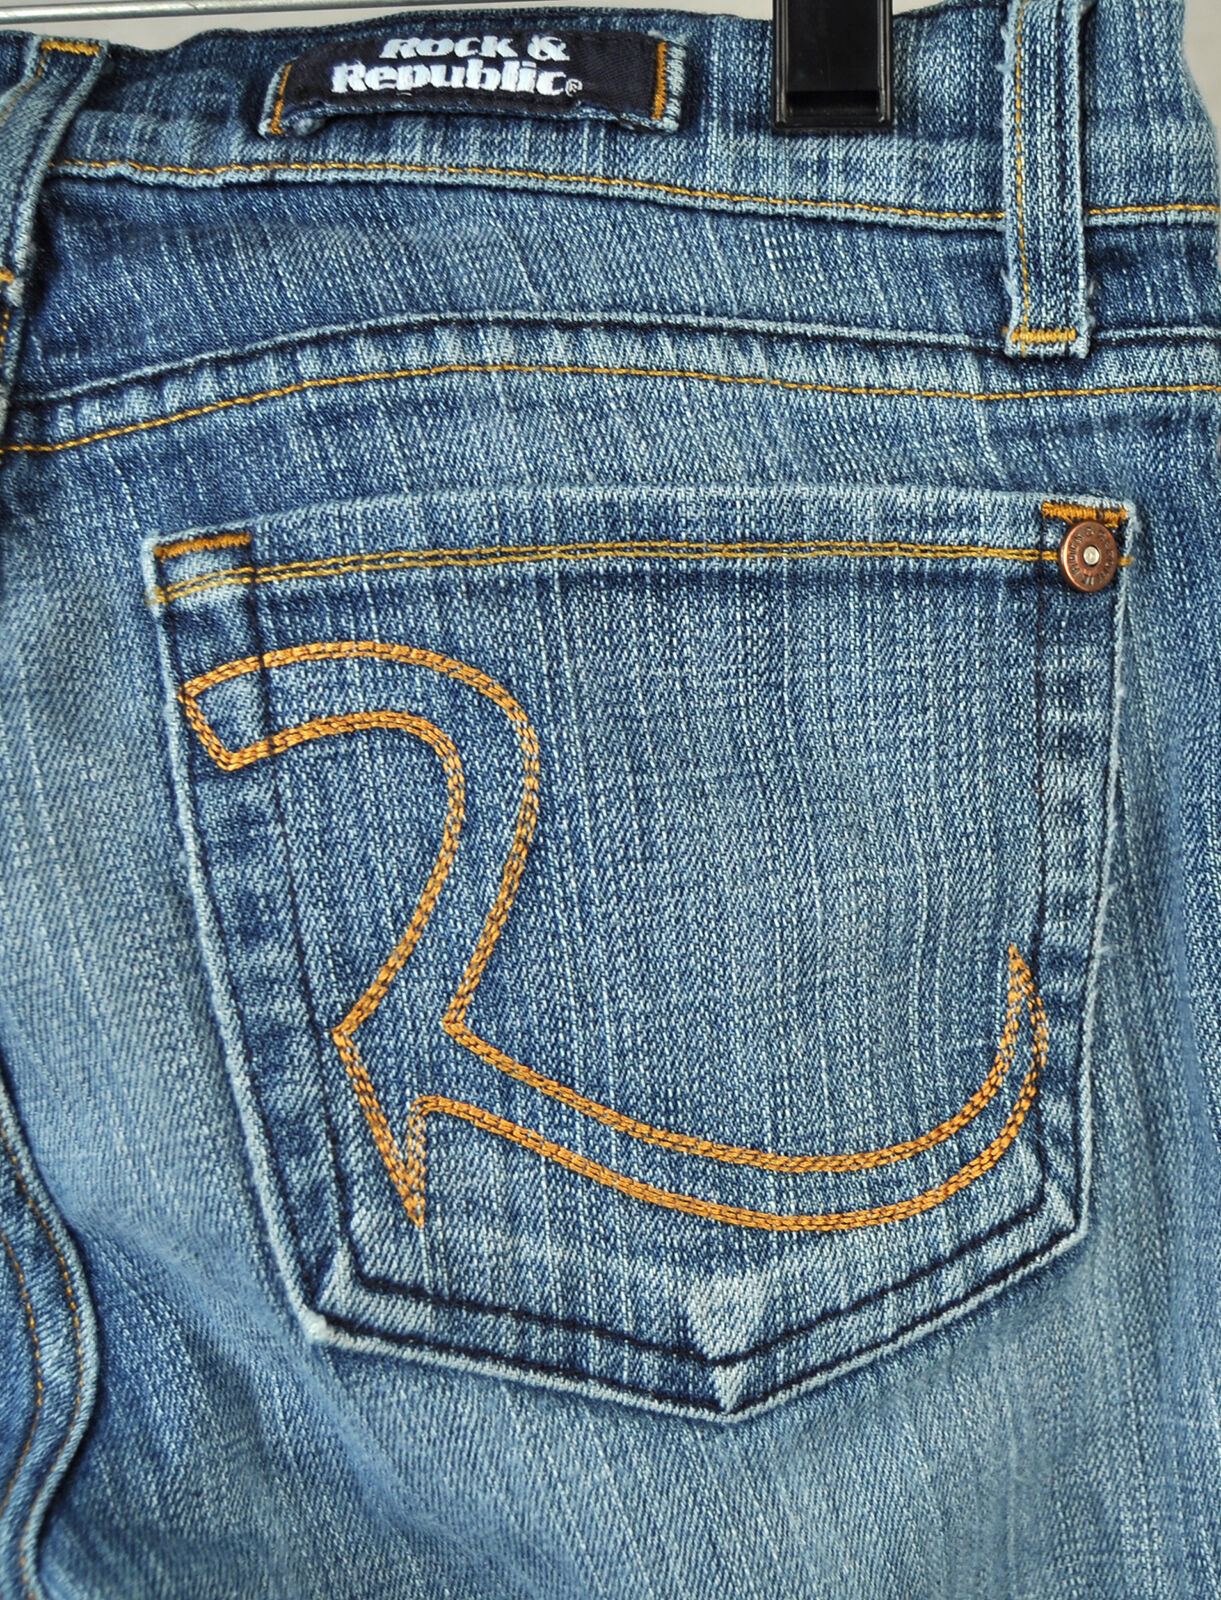 Plus Size 24W Rock & Republic Blue Jean Denim Shorts NWT$54-$60 Size 6